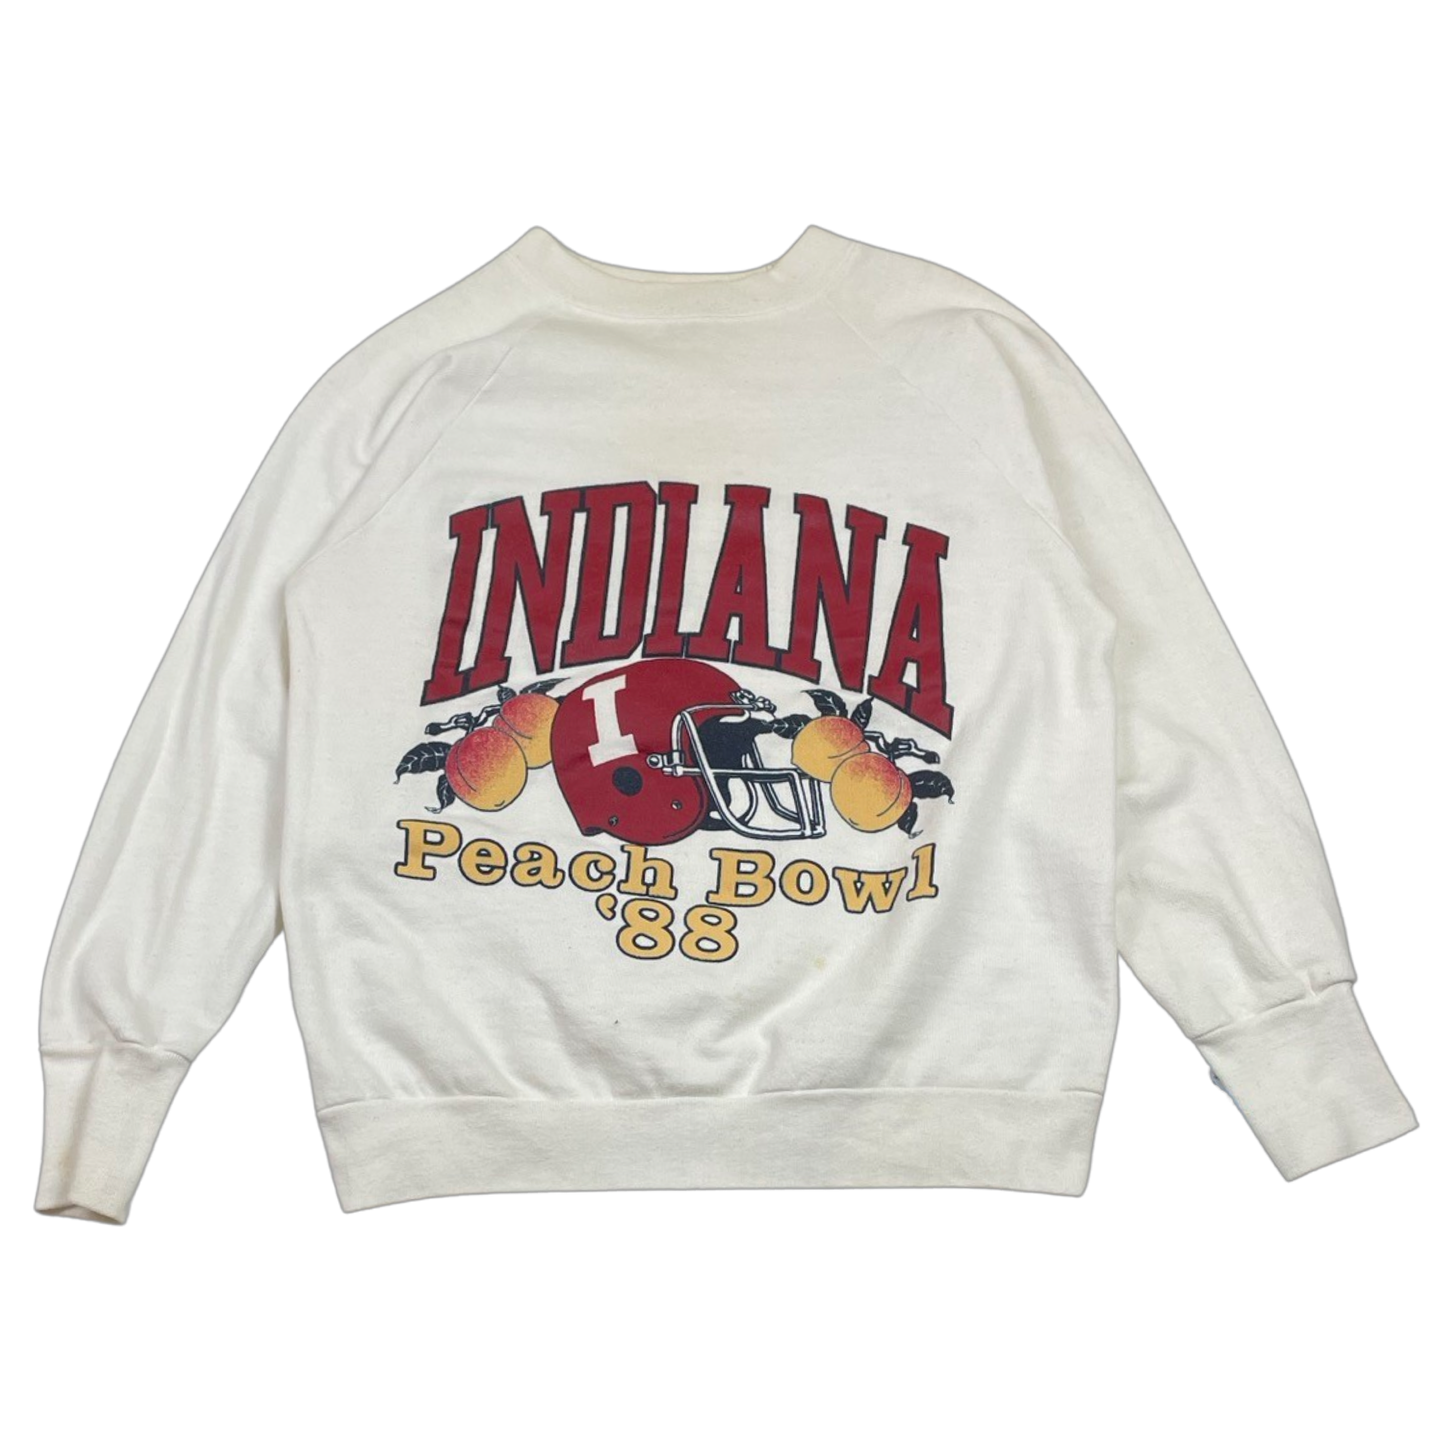 '88 Indiana University Peach Bowl Crewneck